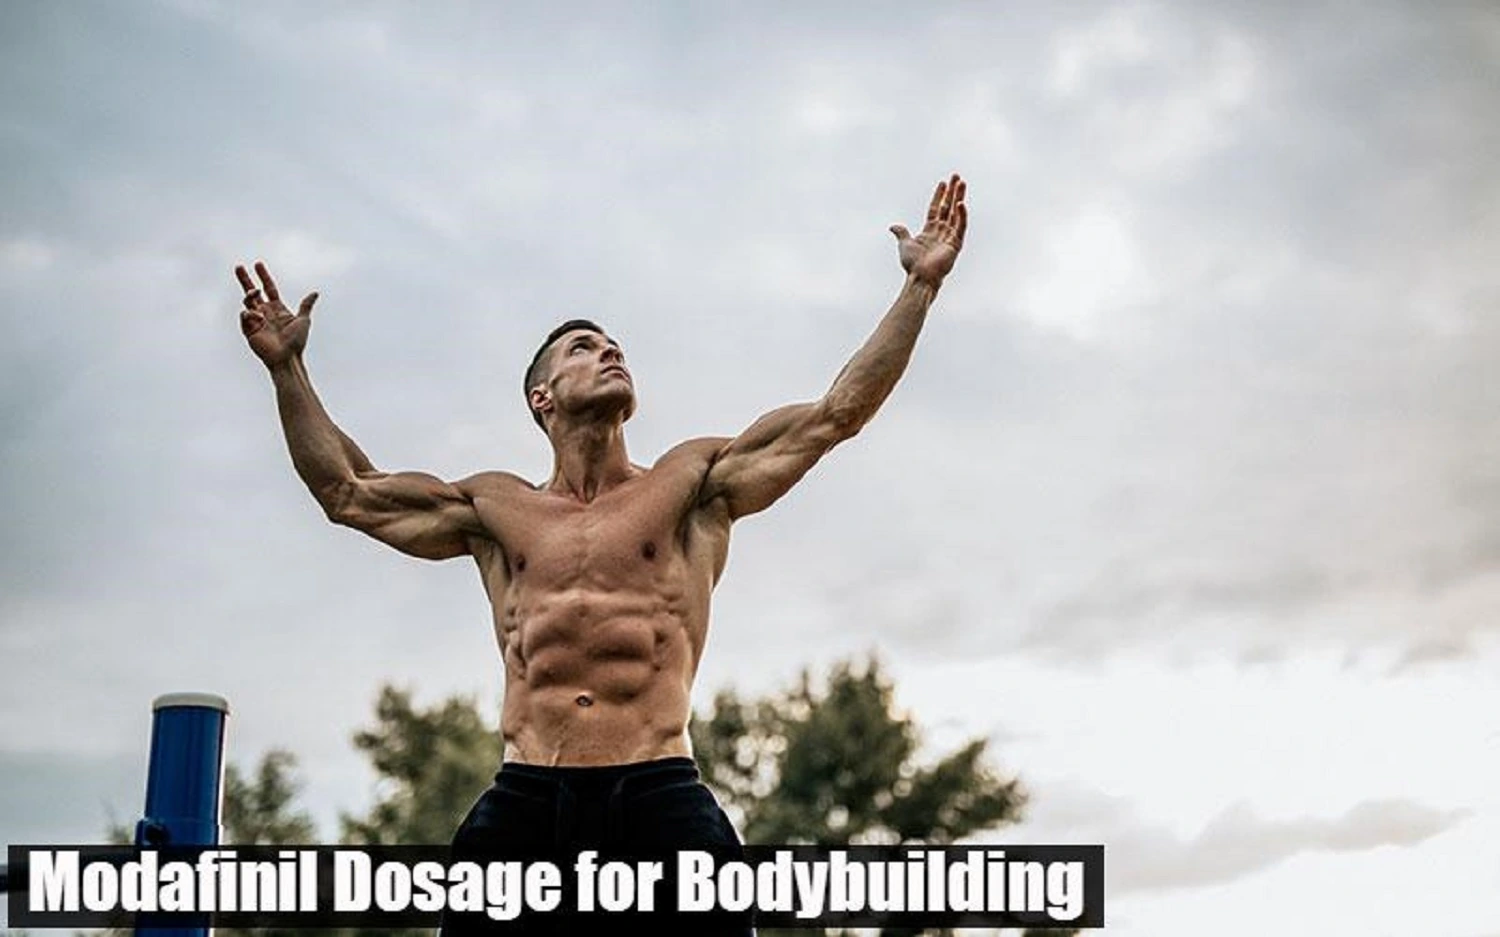 Modafinil dosage for bodybuilding